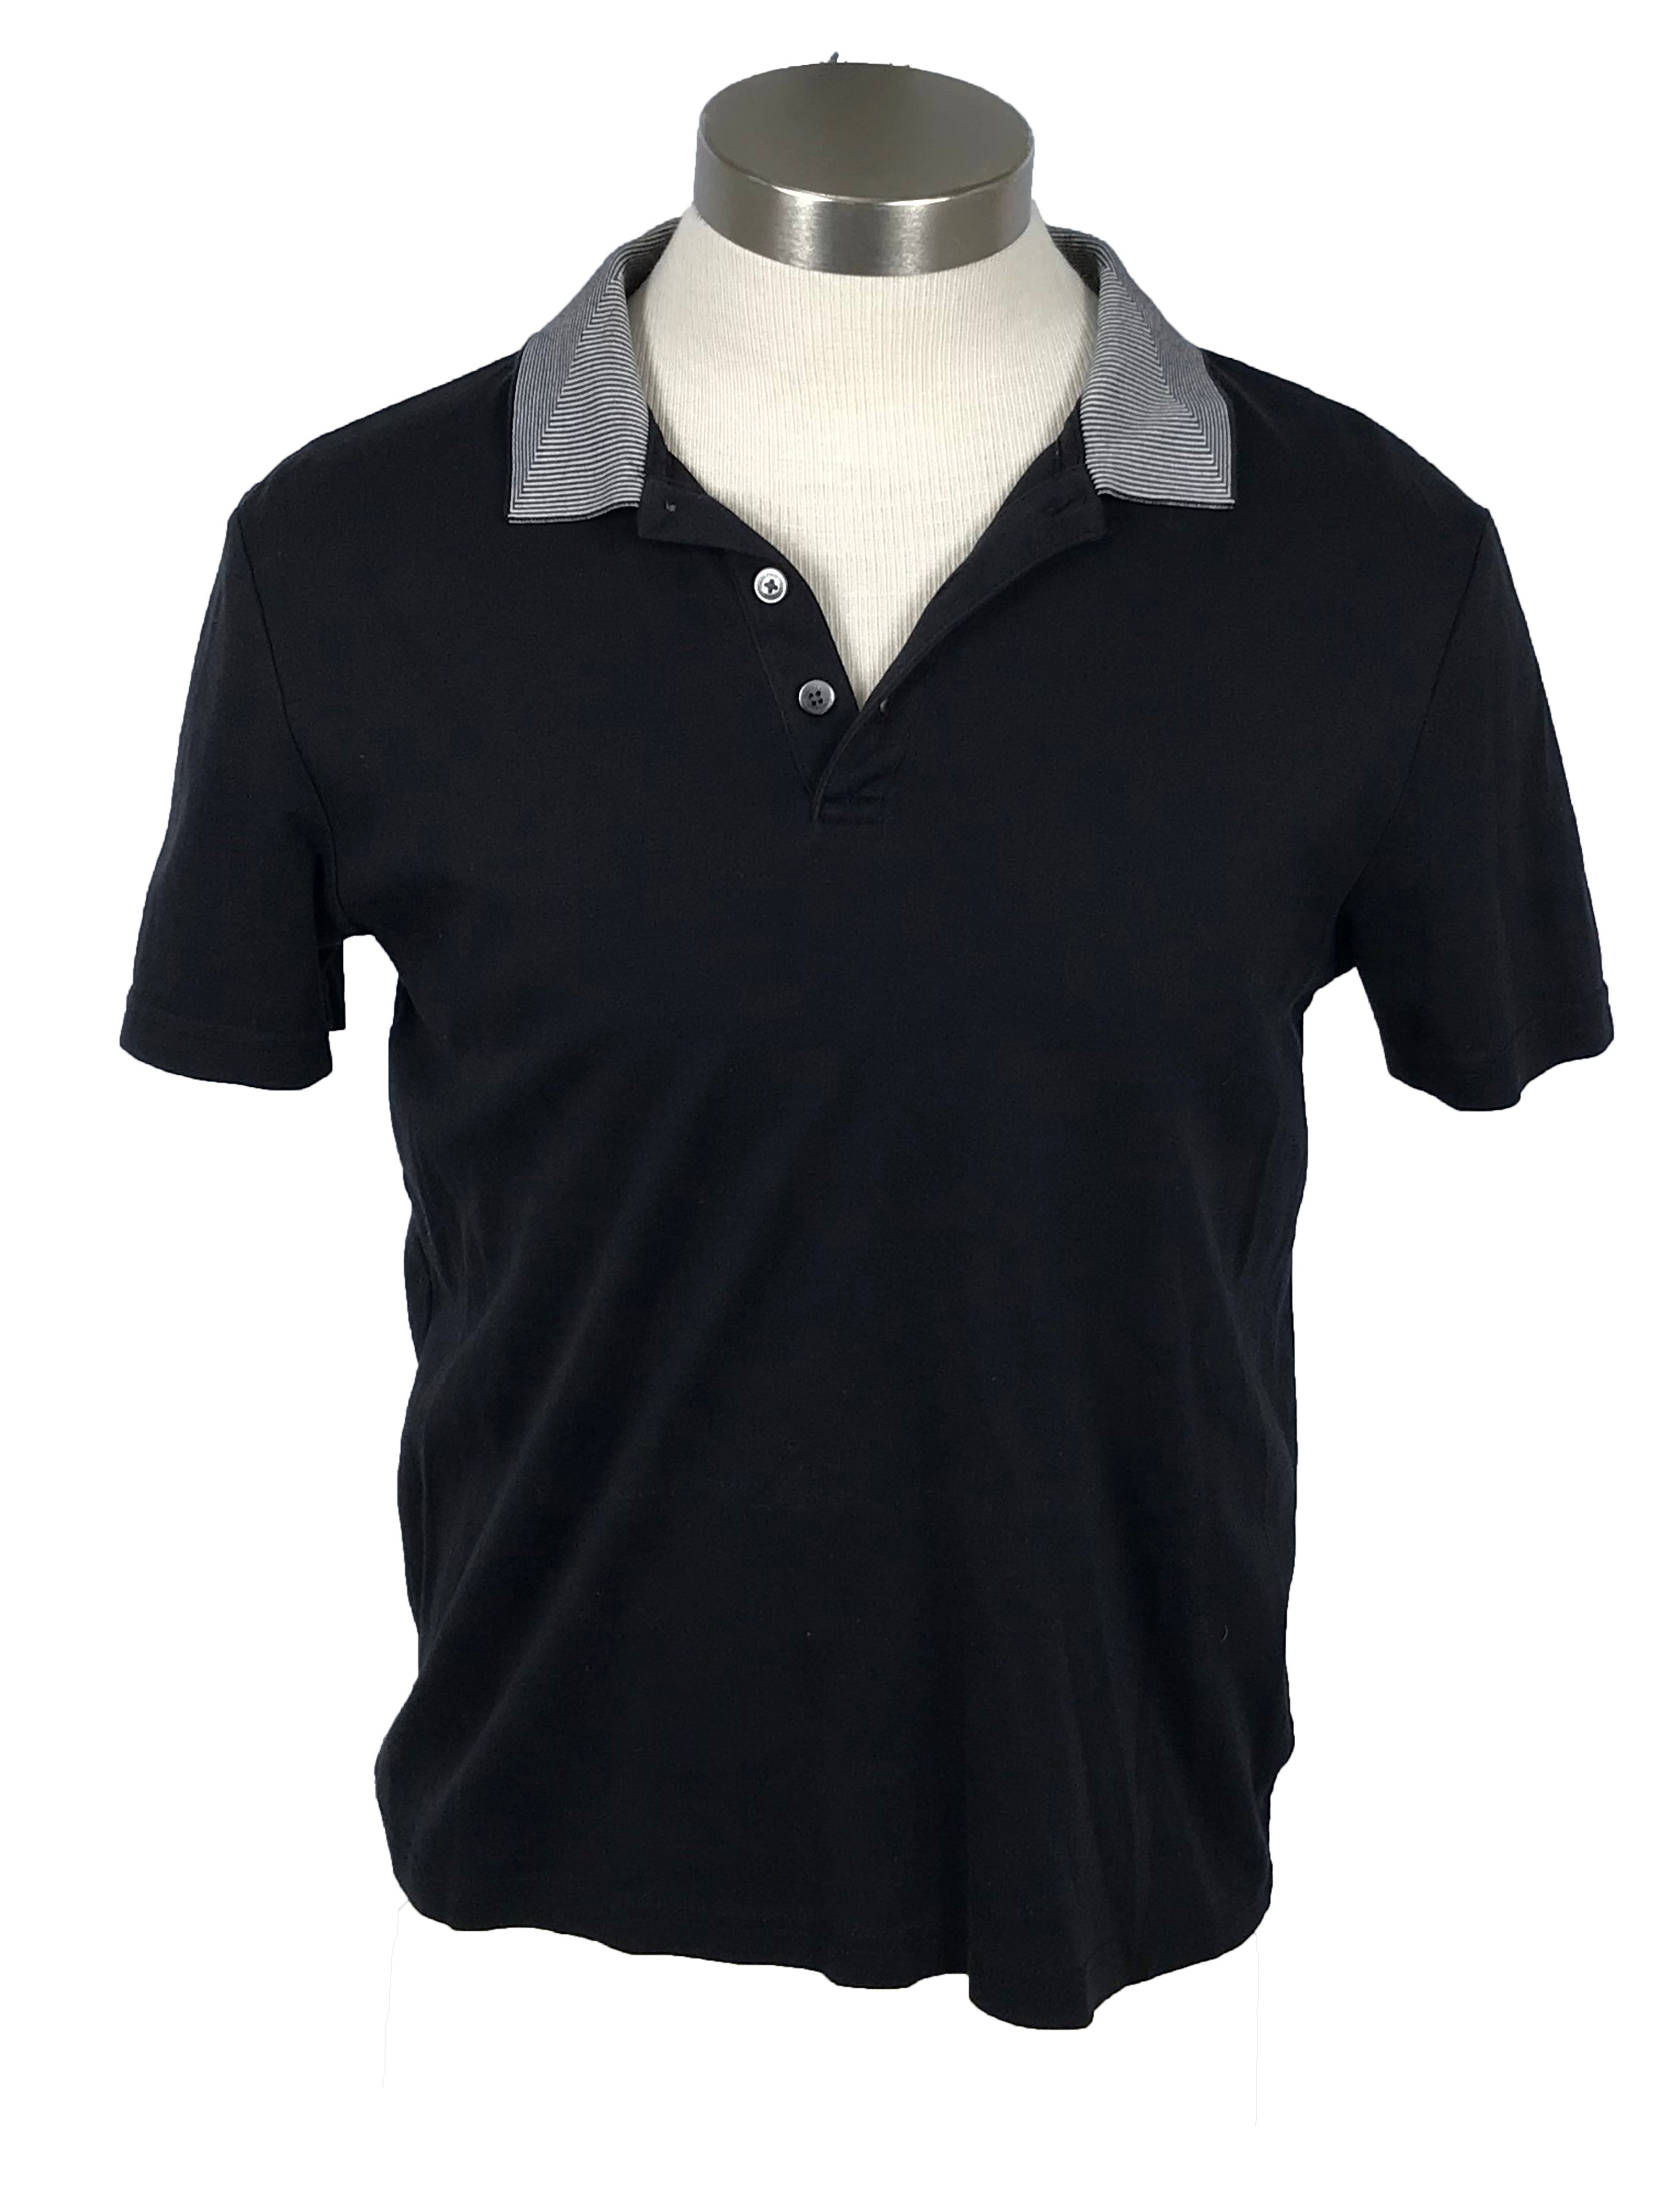 Calvin Klein Black Polo Shirt Men's Size M